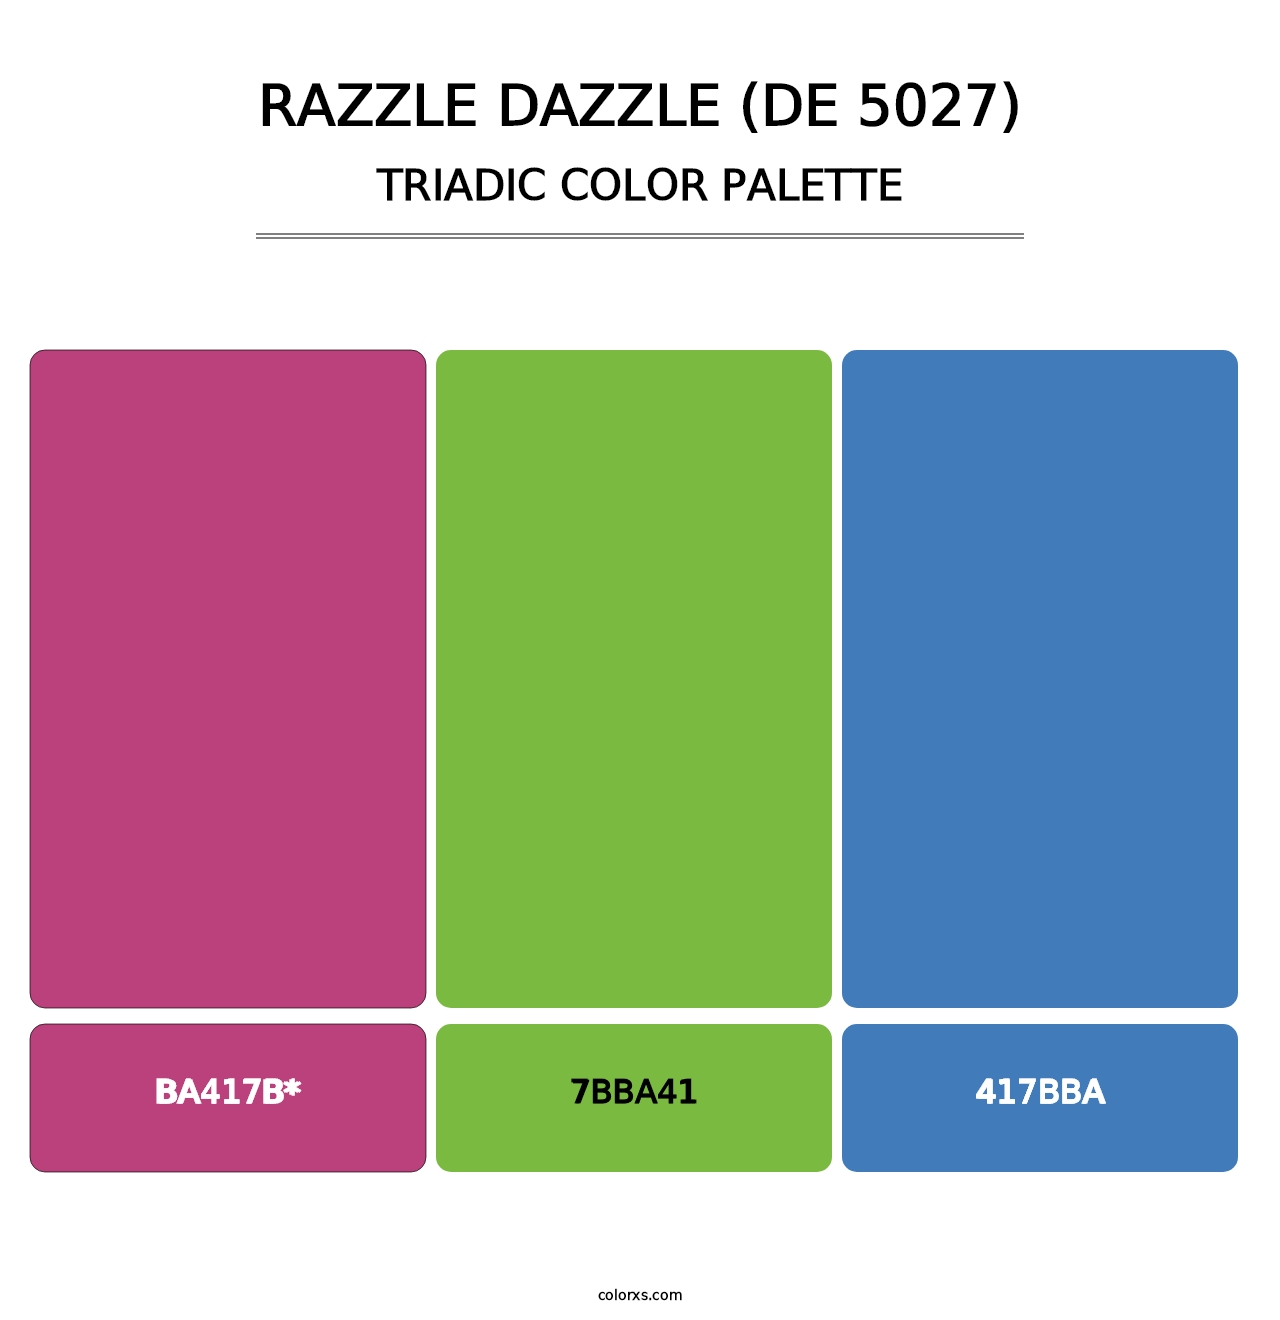 Razzle Dazzle (DE 5027) - Triadic Color Palette